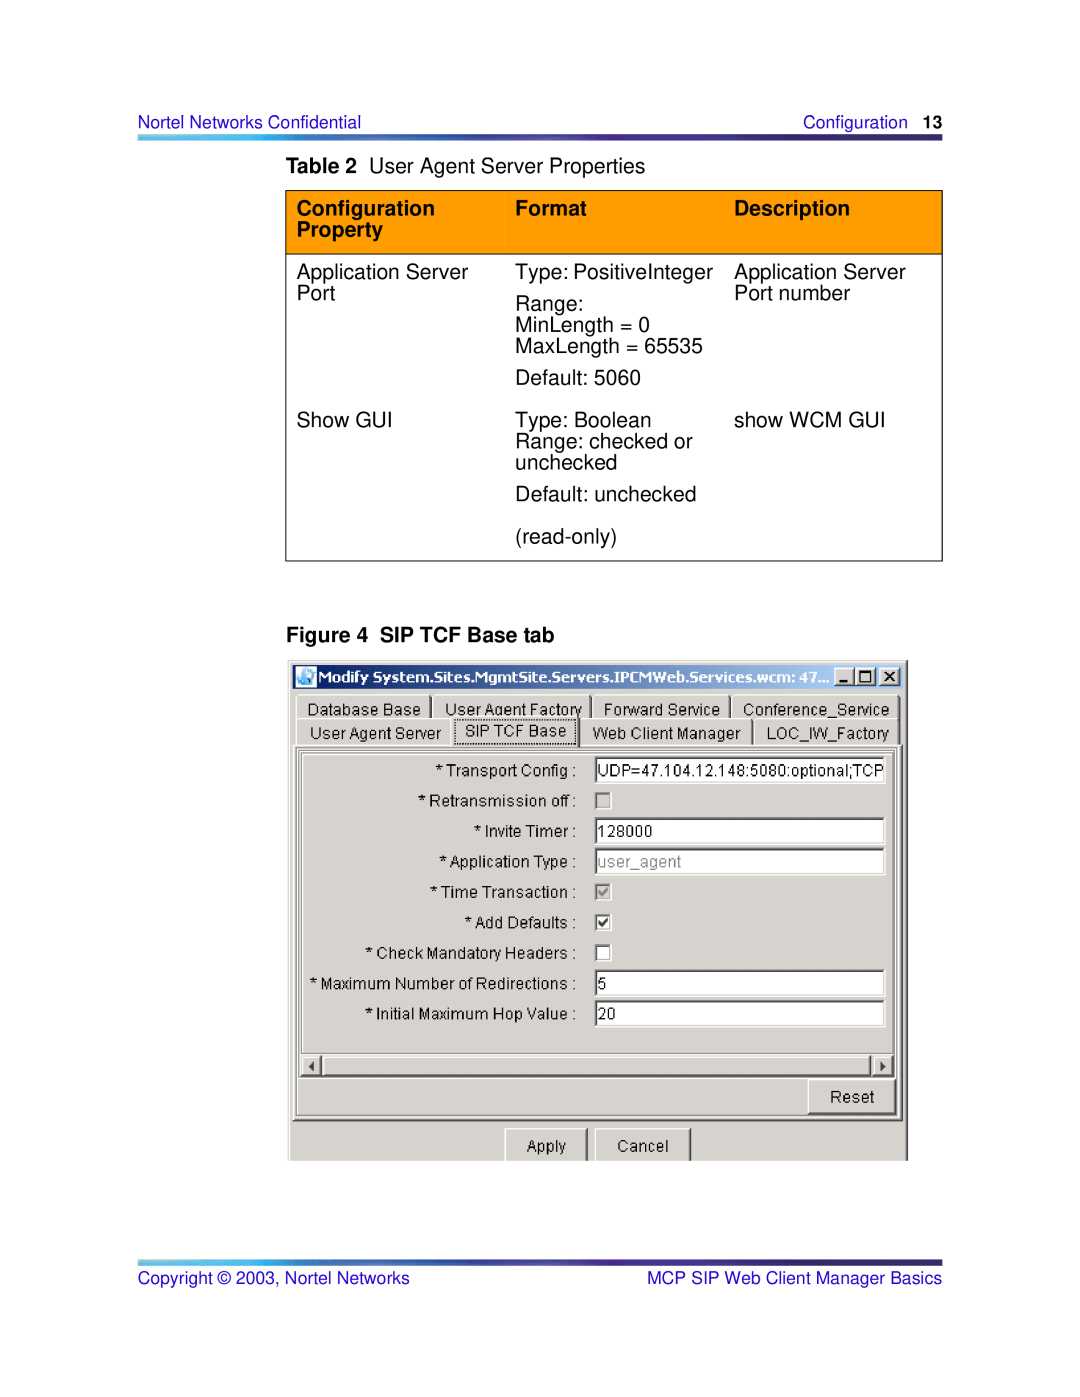 Nortel Networks NN10277-111 manual SIP TCF Base tab, Configuration, Format, Description, Property 